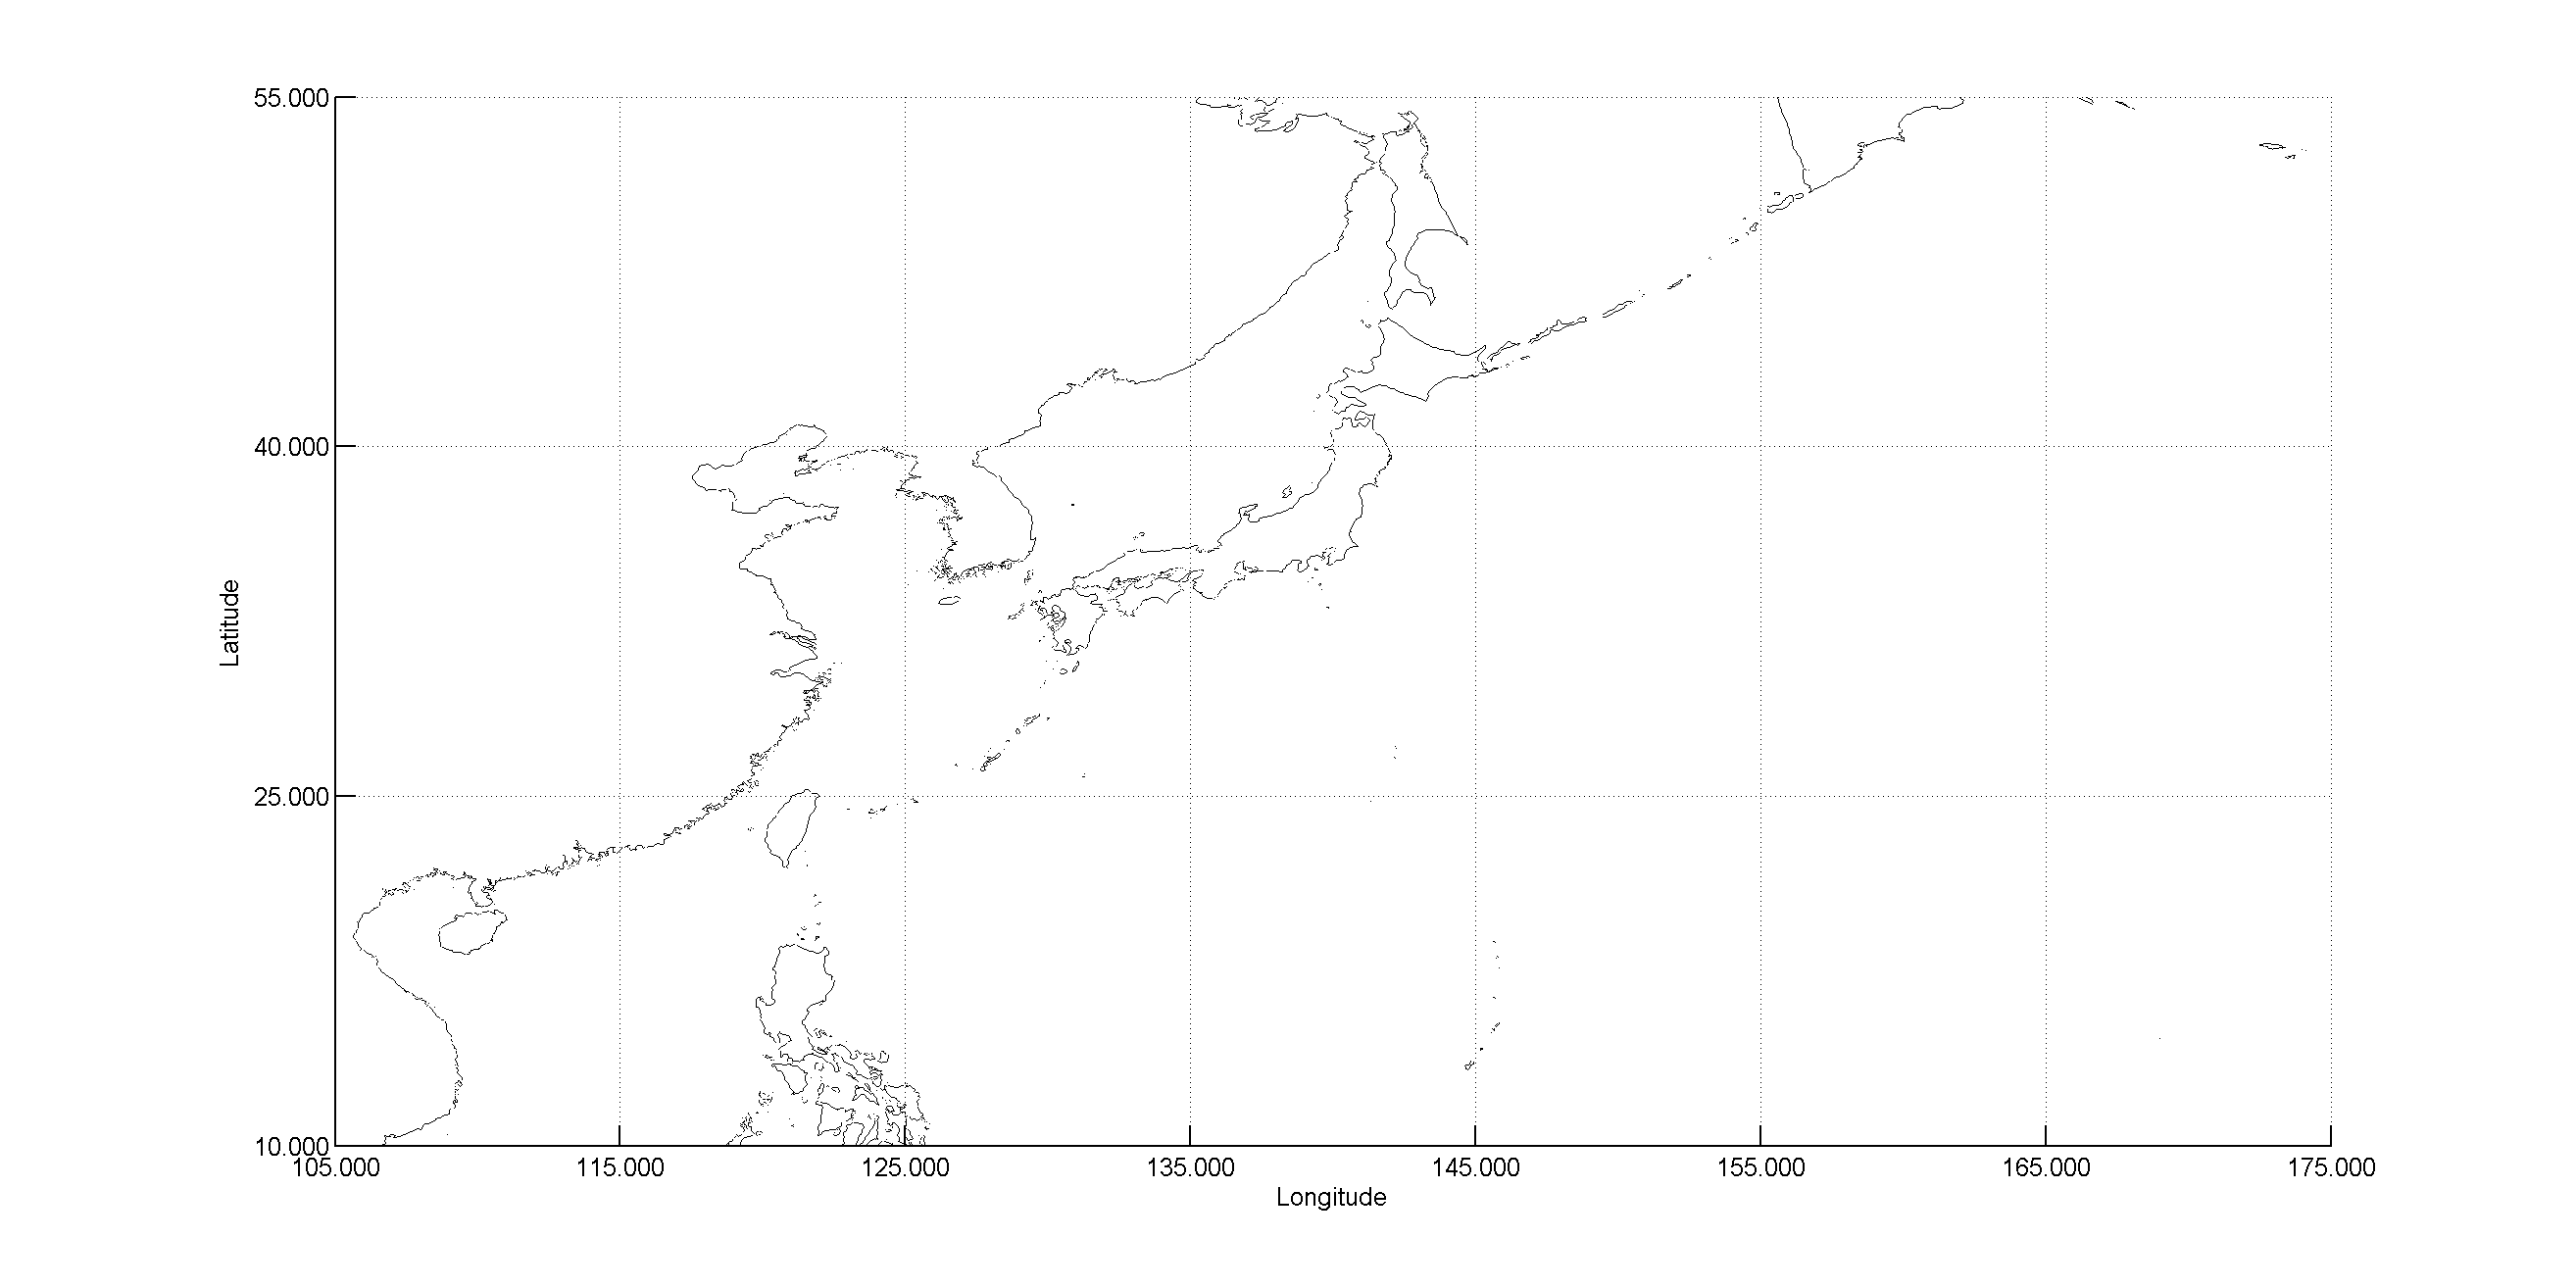 CYCLE_204 - Japan Descending passes